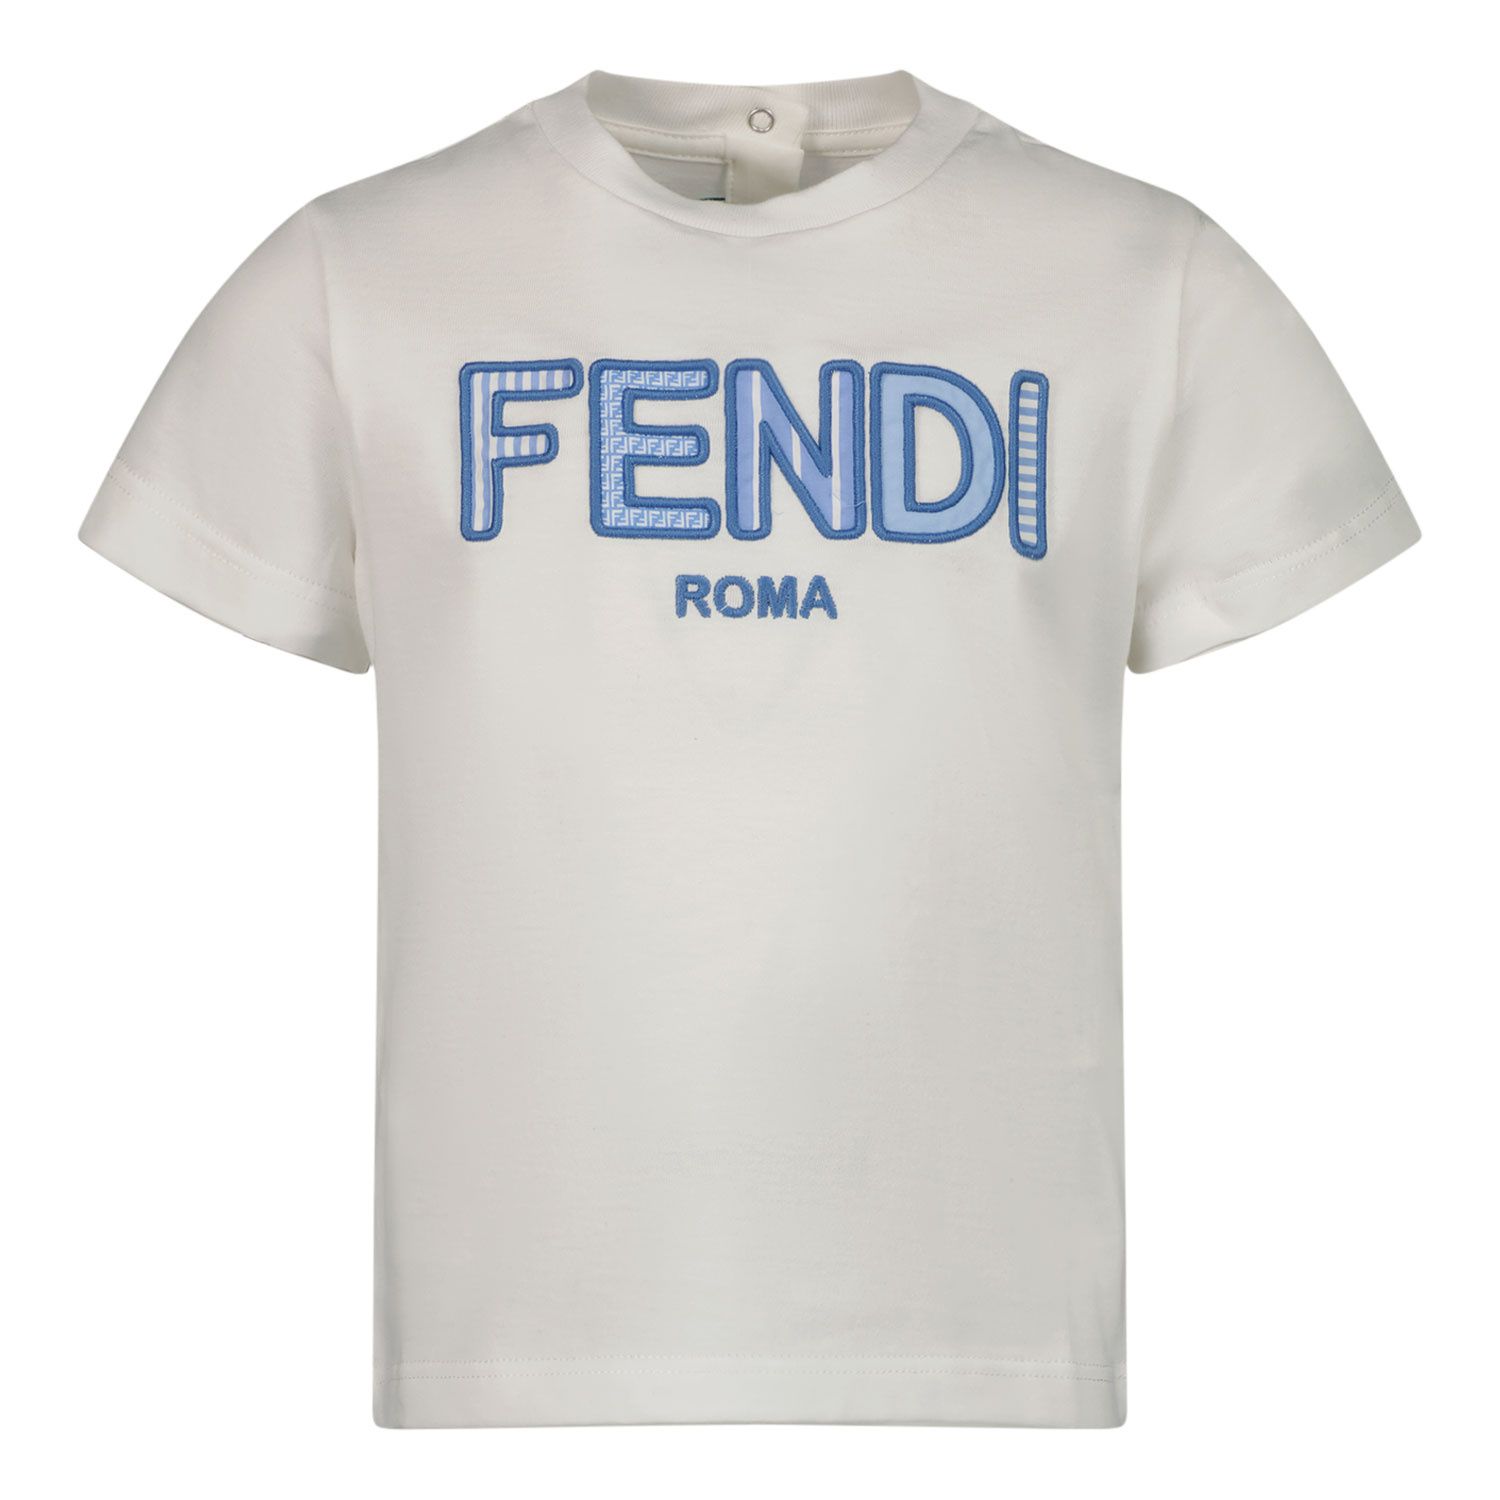 Afbeelding van Fendi BUI037 7AJ baby t-shirt blauw/wit